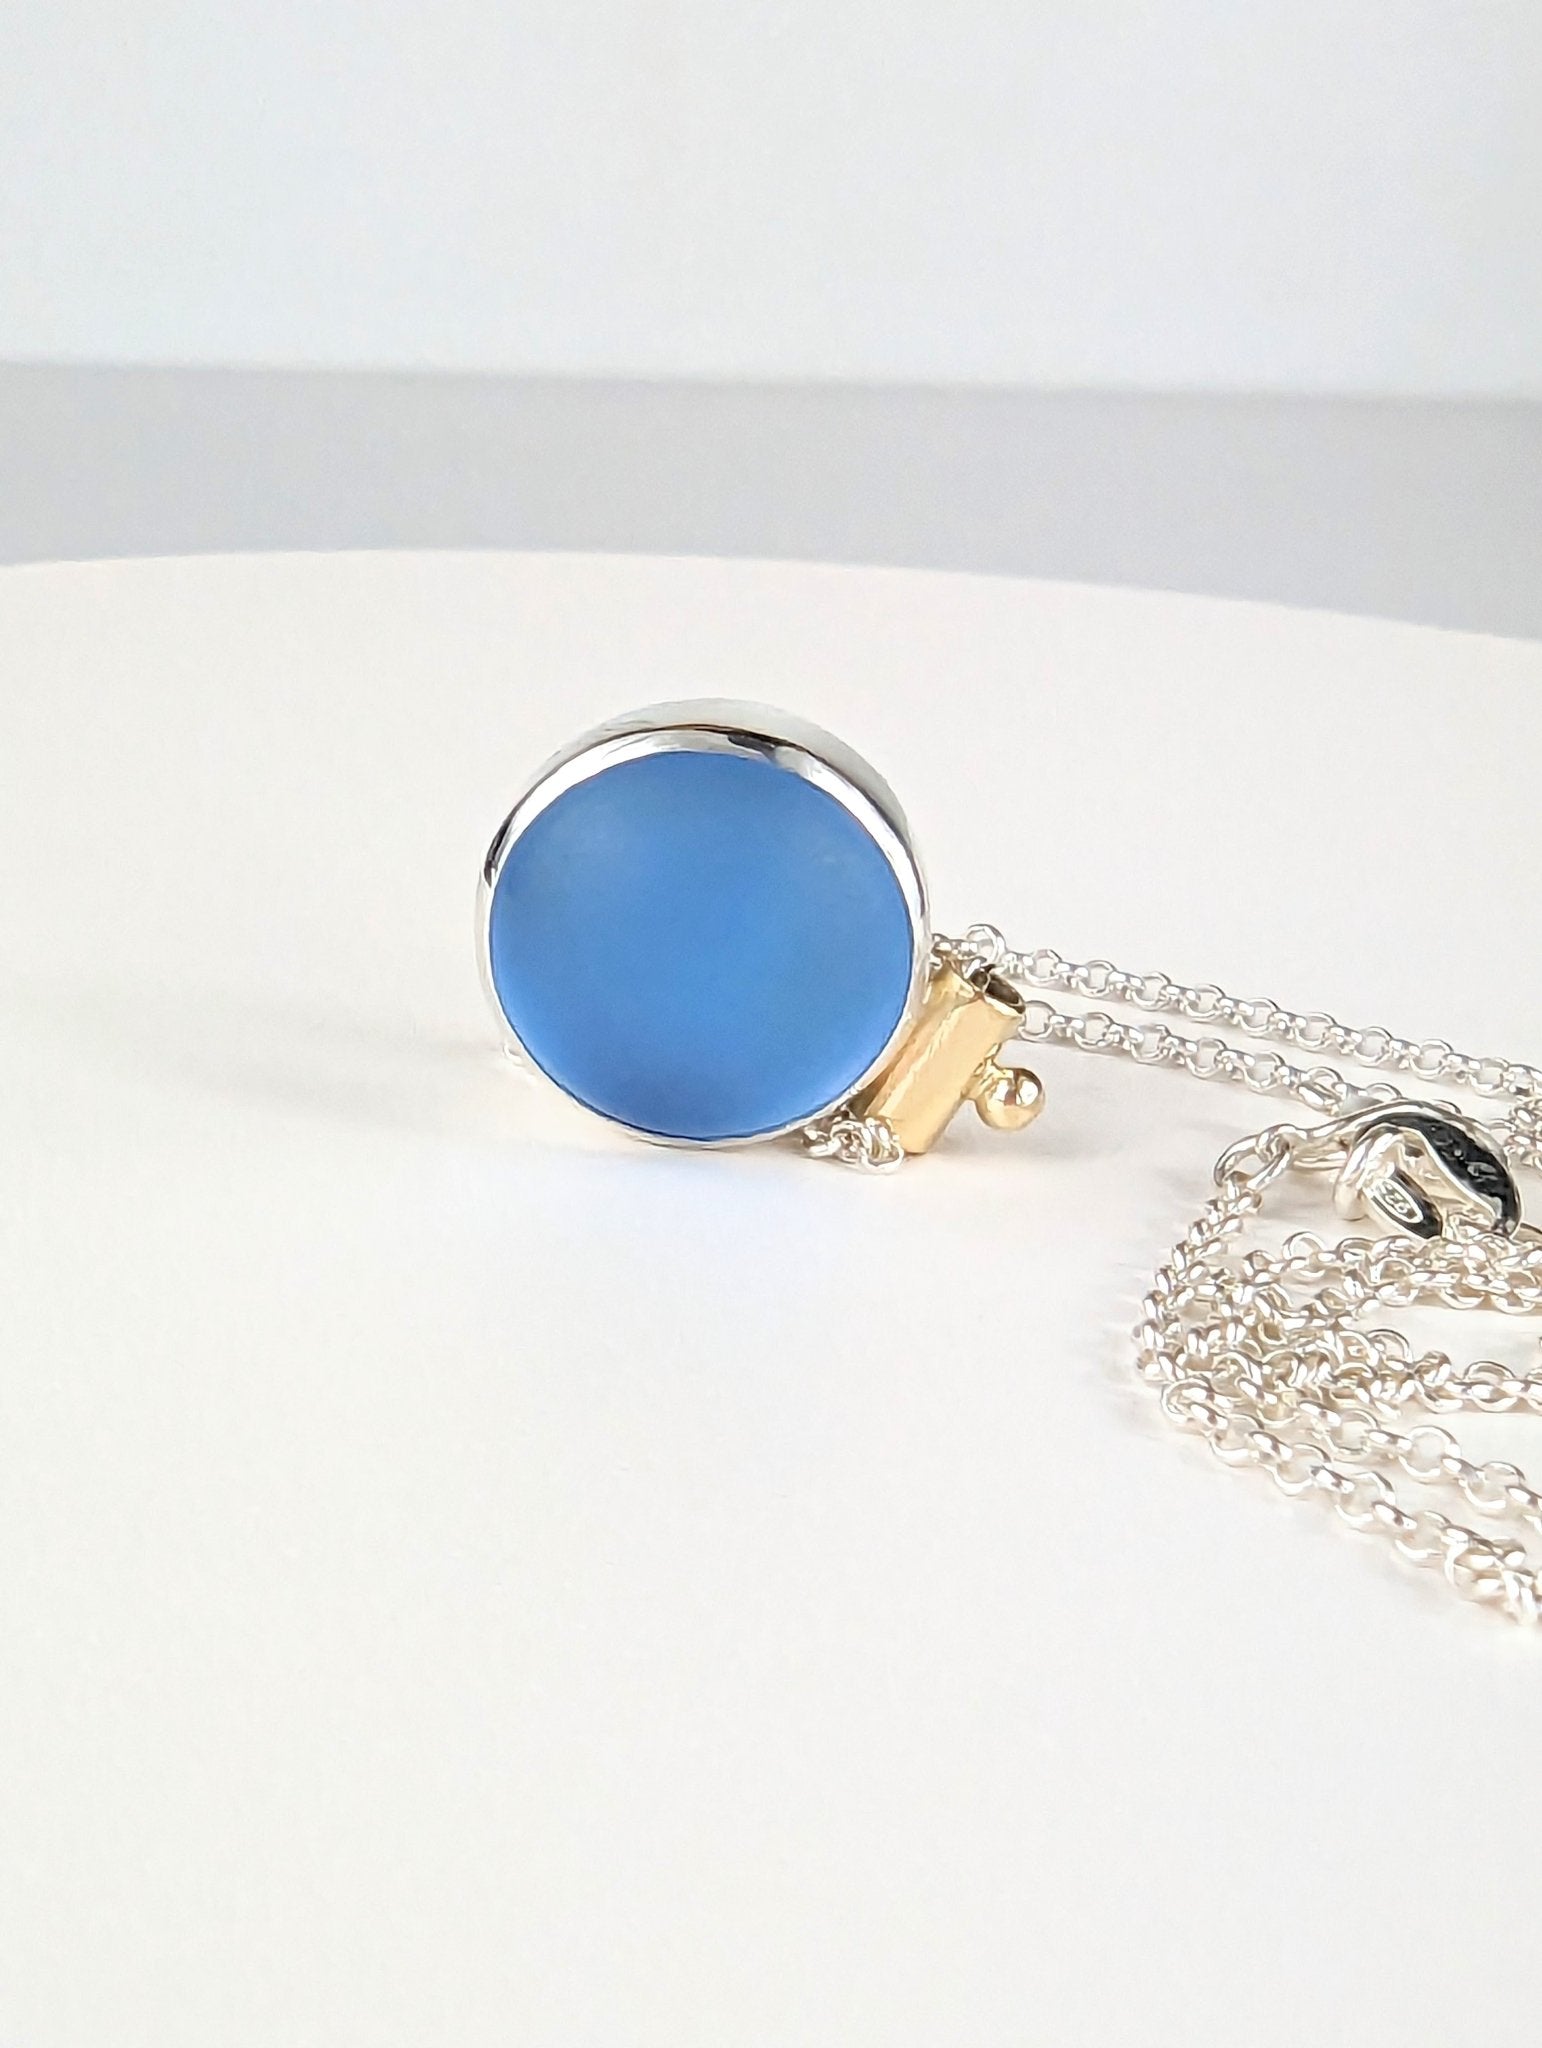 Cornflower blue sea glass Limited ALLURE Collection - Booblinka Jewellery